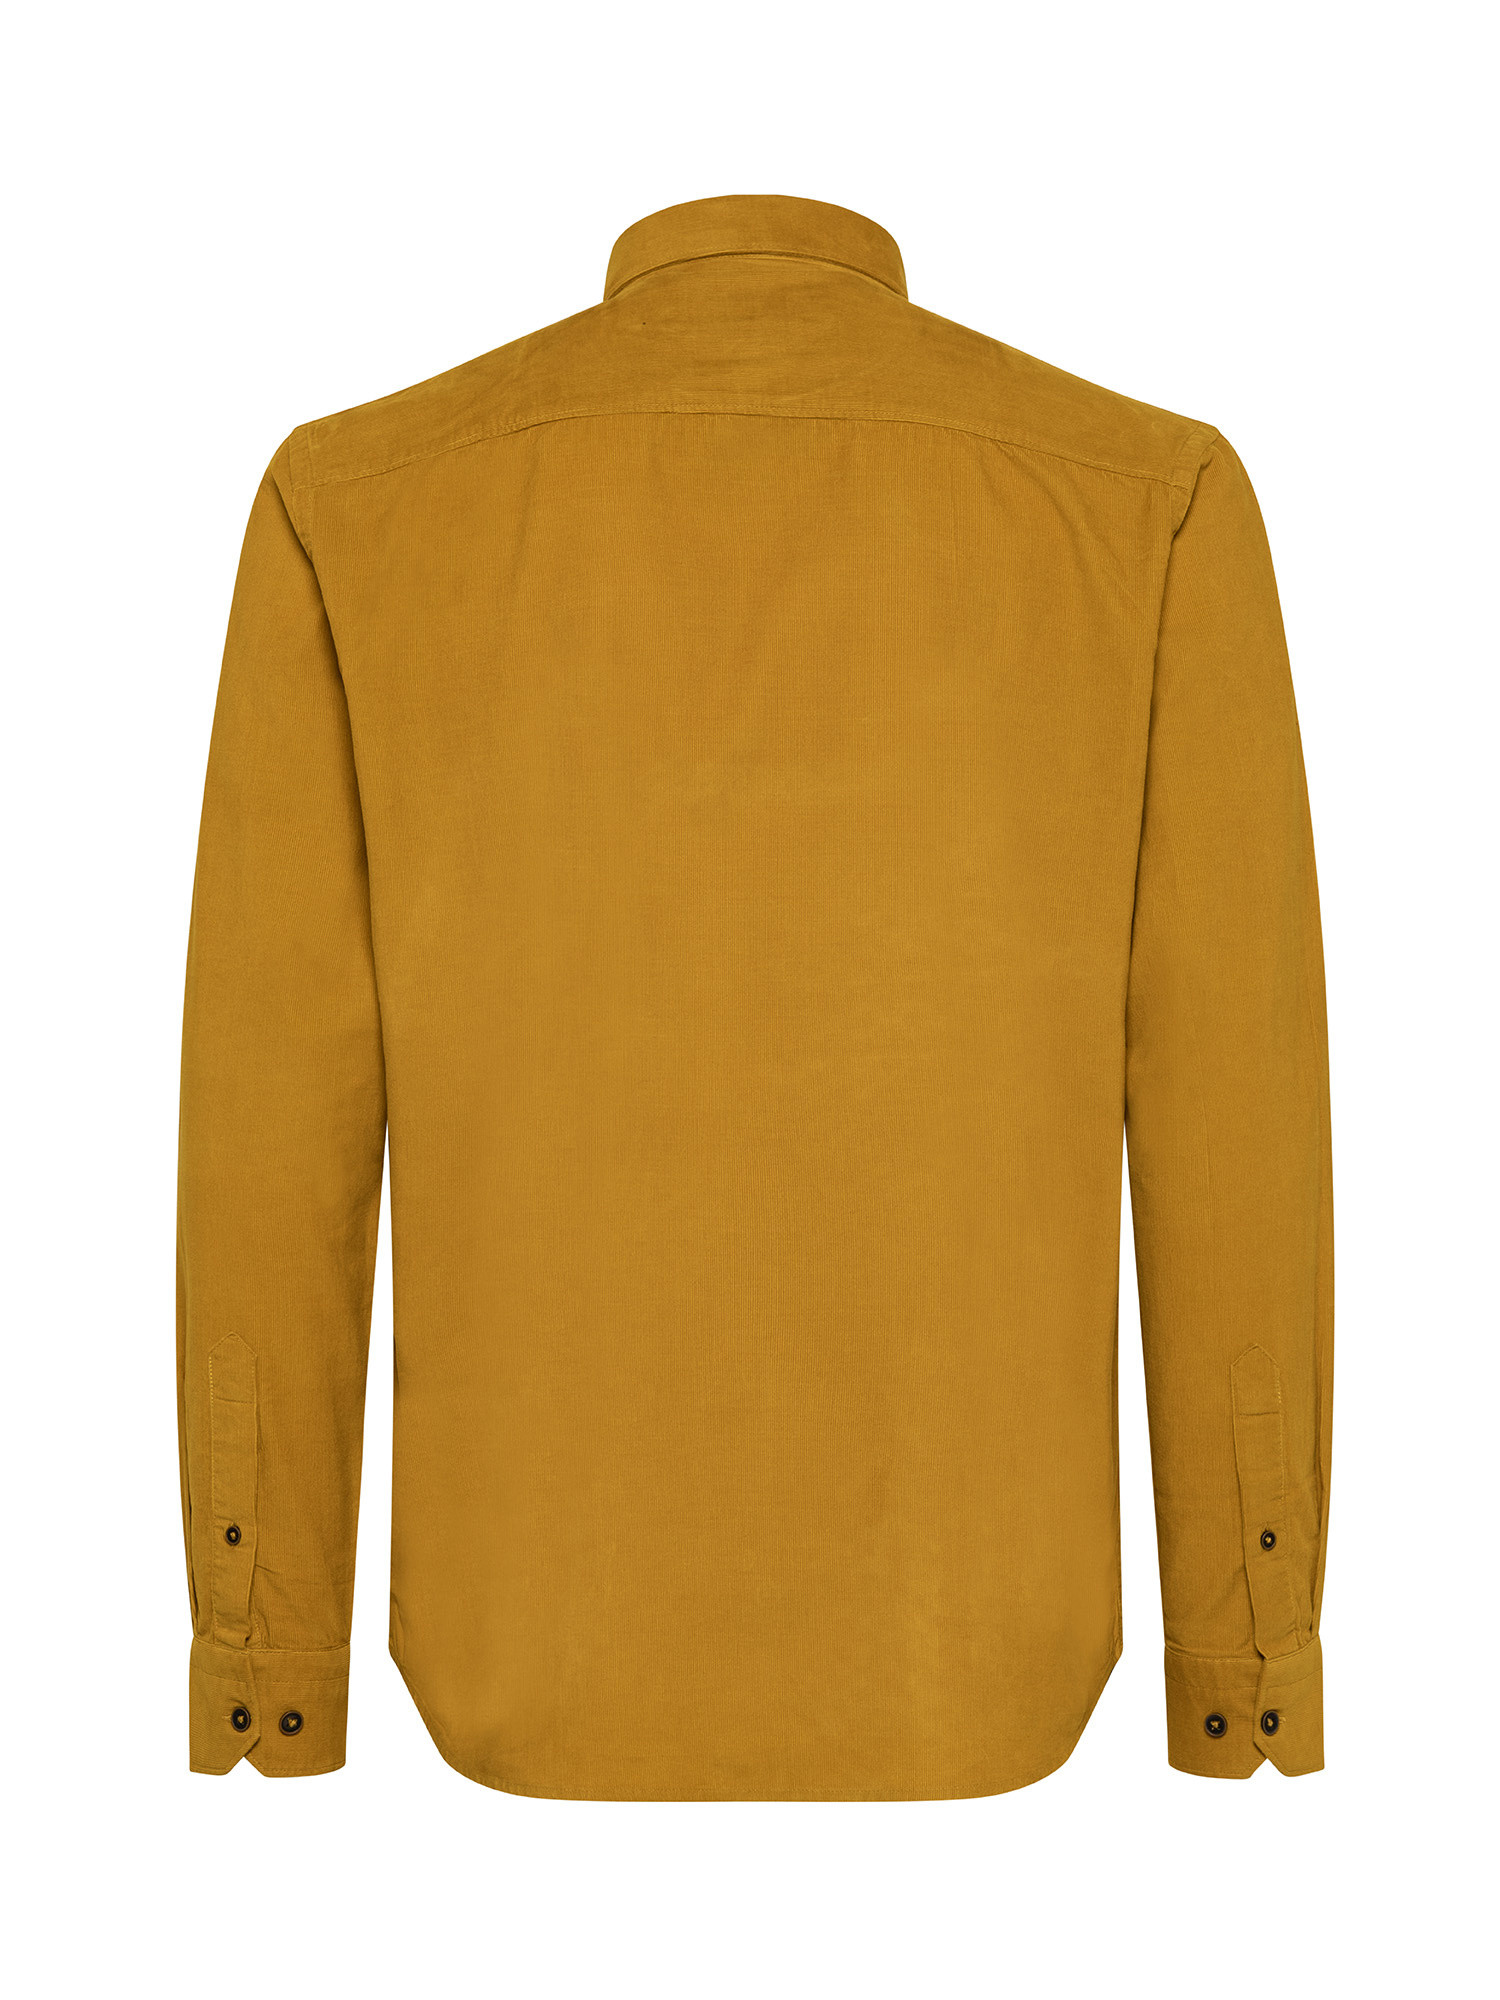 JCT - Cotton velvet shirt, Mustard Yellow, large image number 1